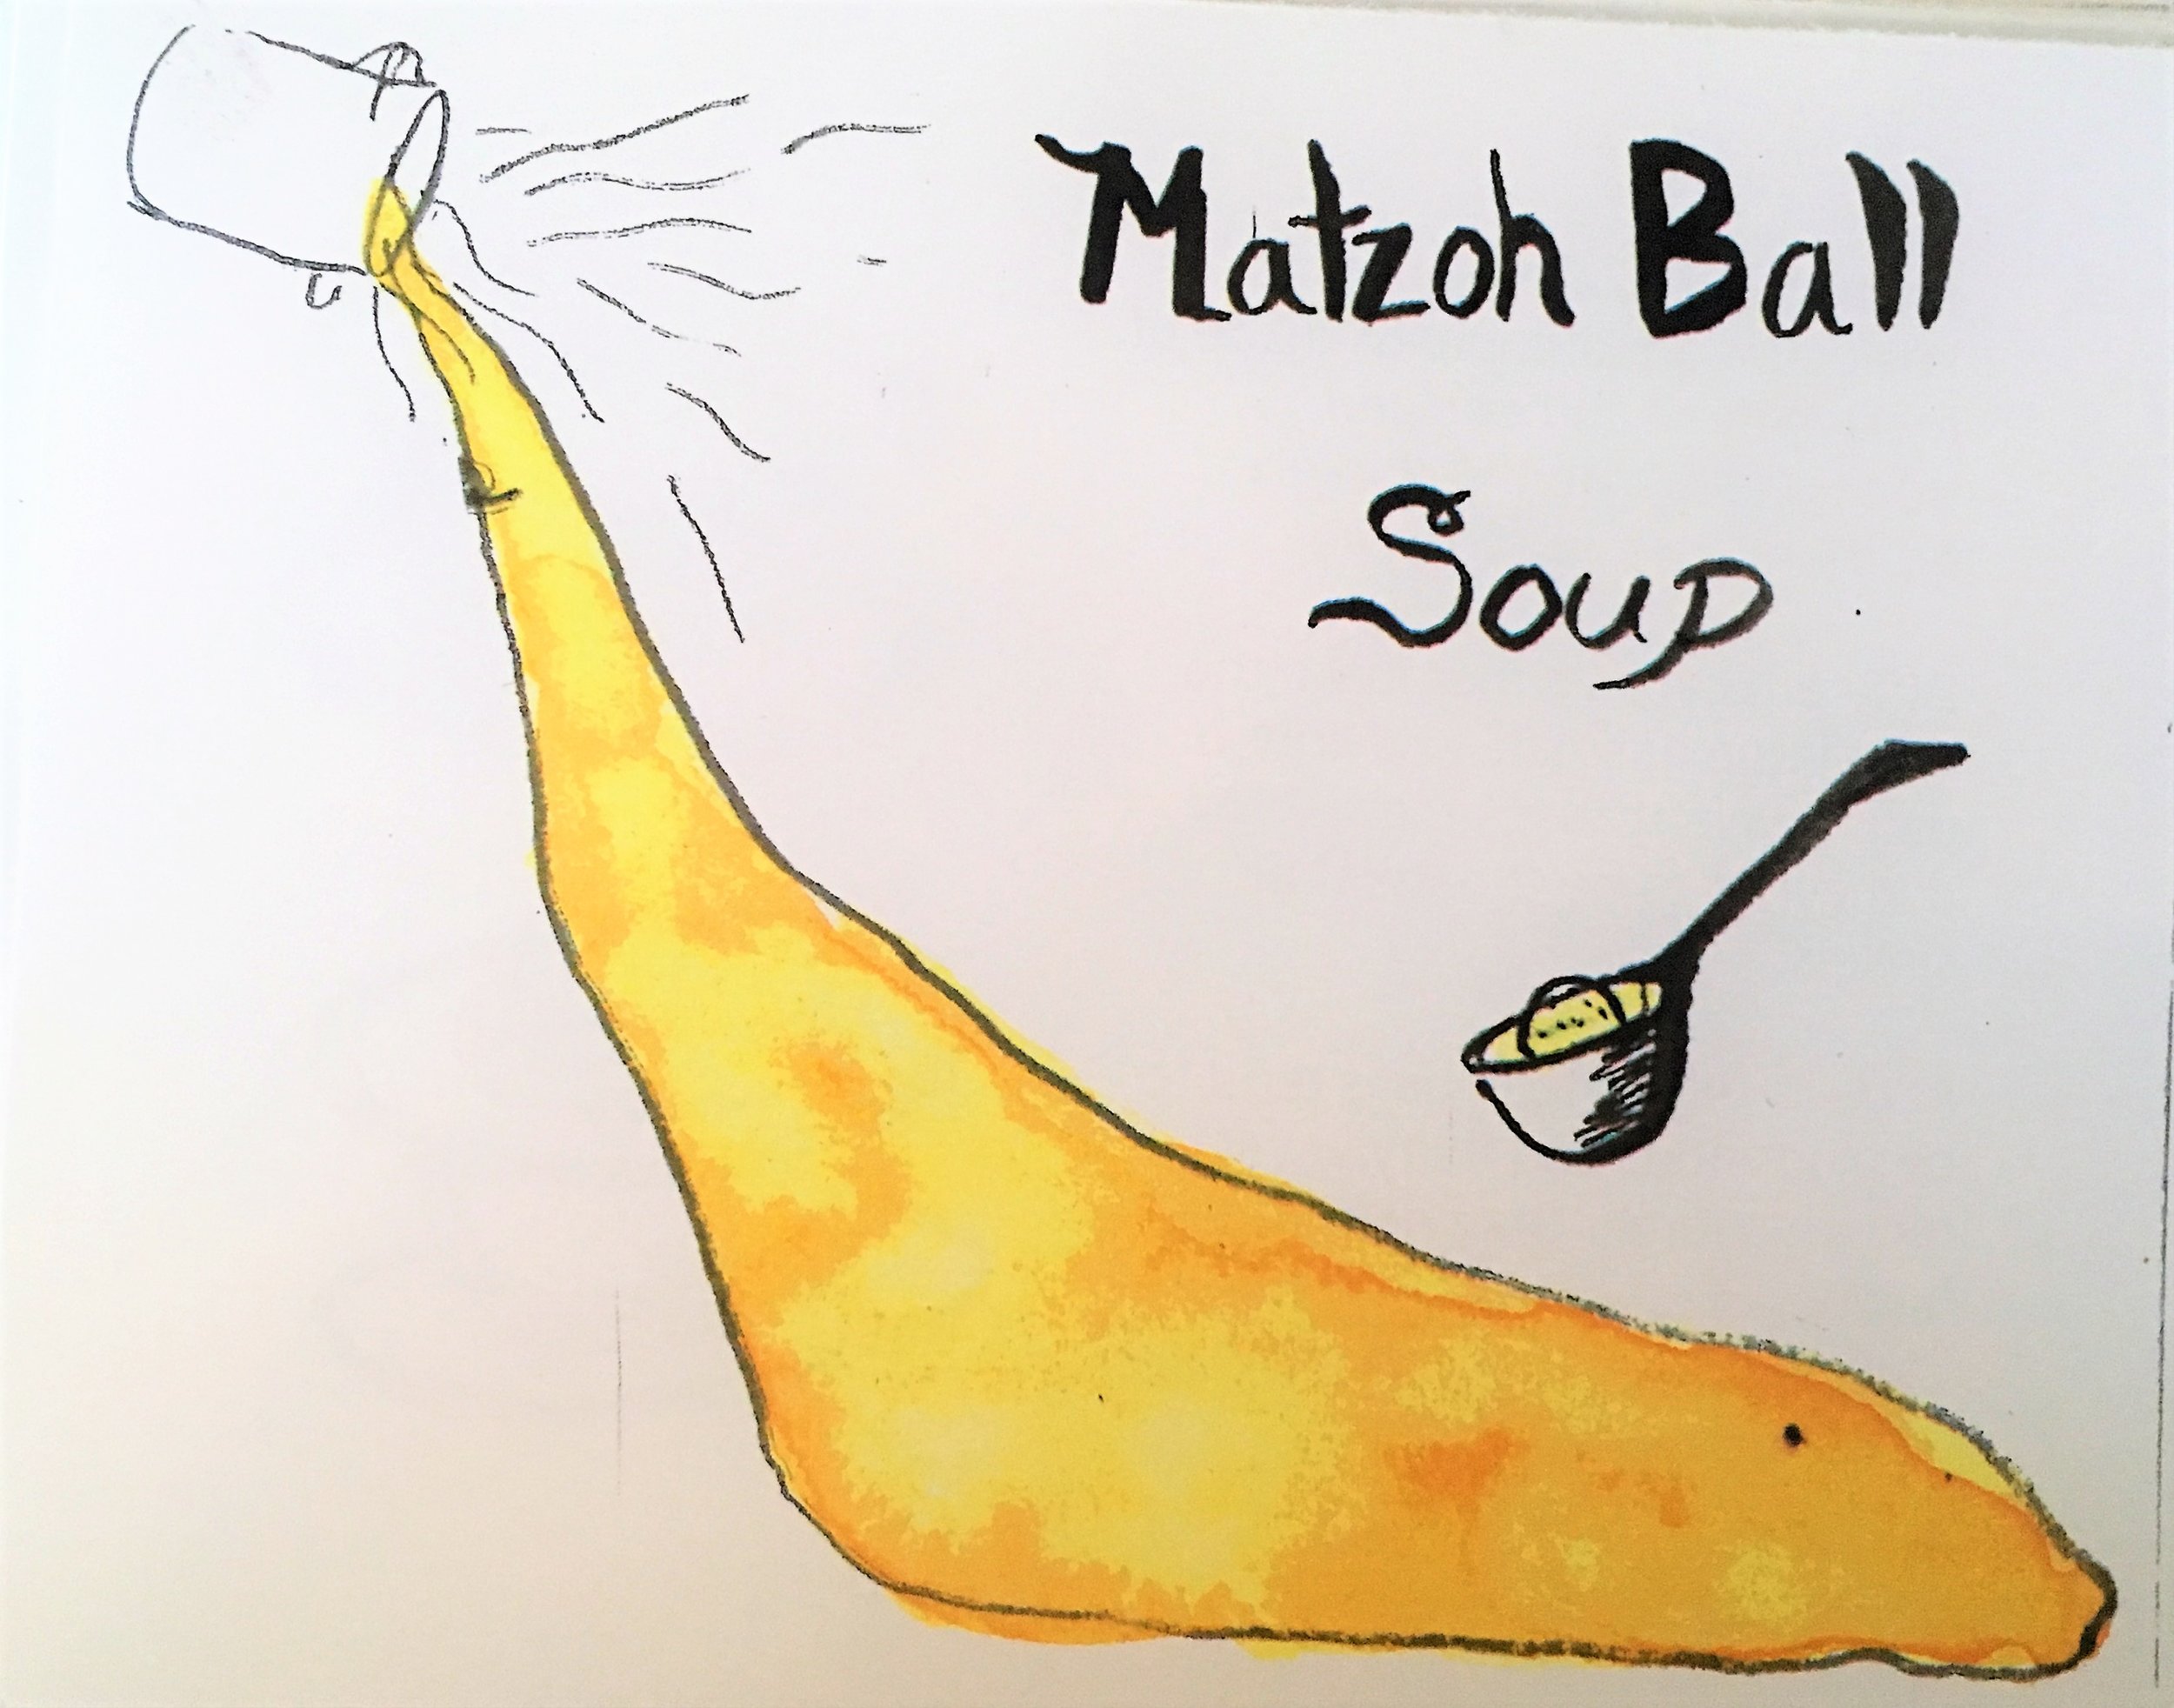 Matzoh Ball Soup, inside image